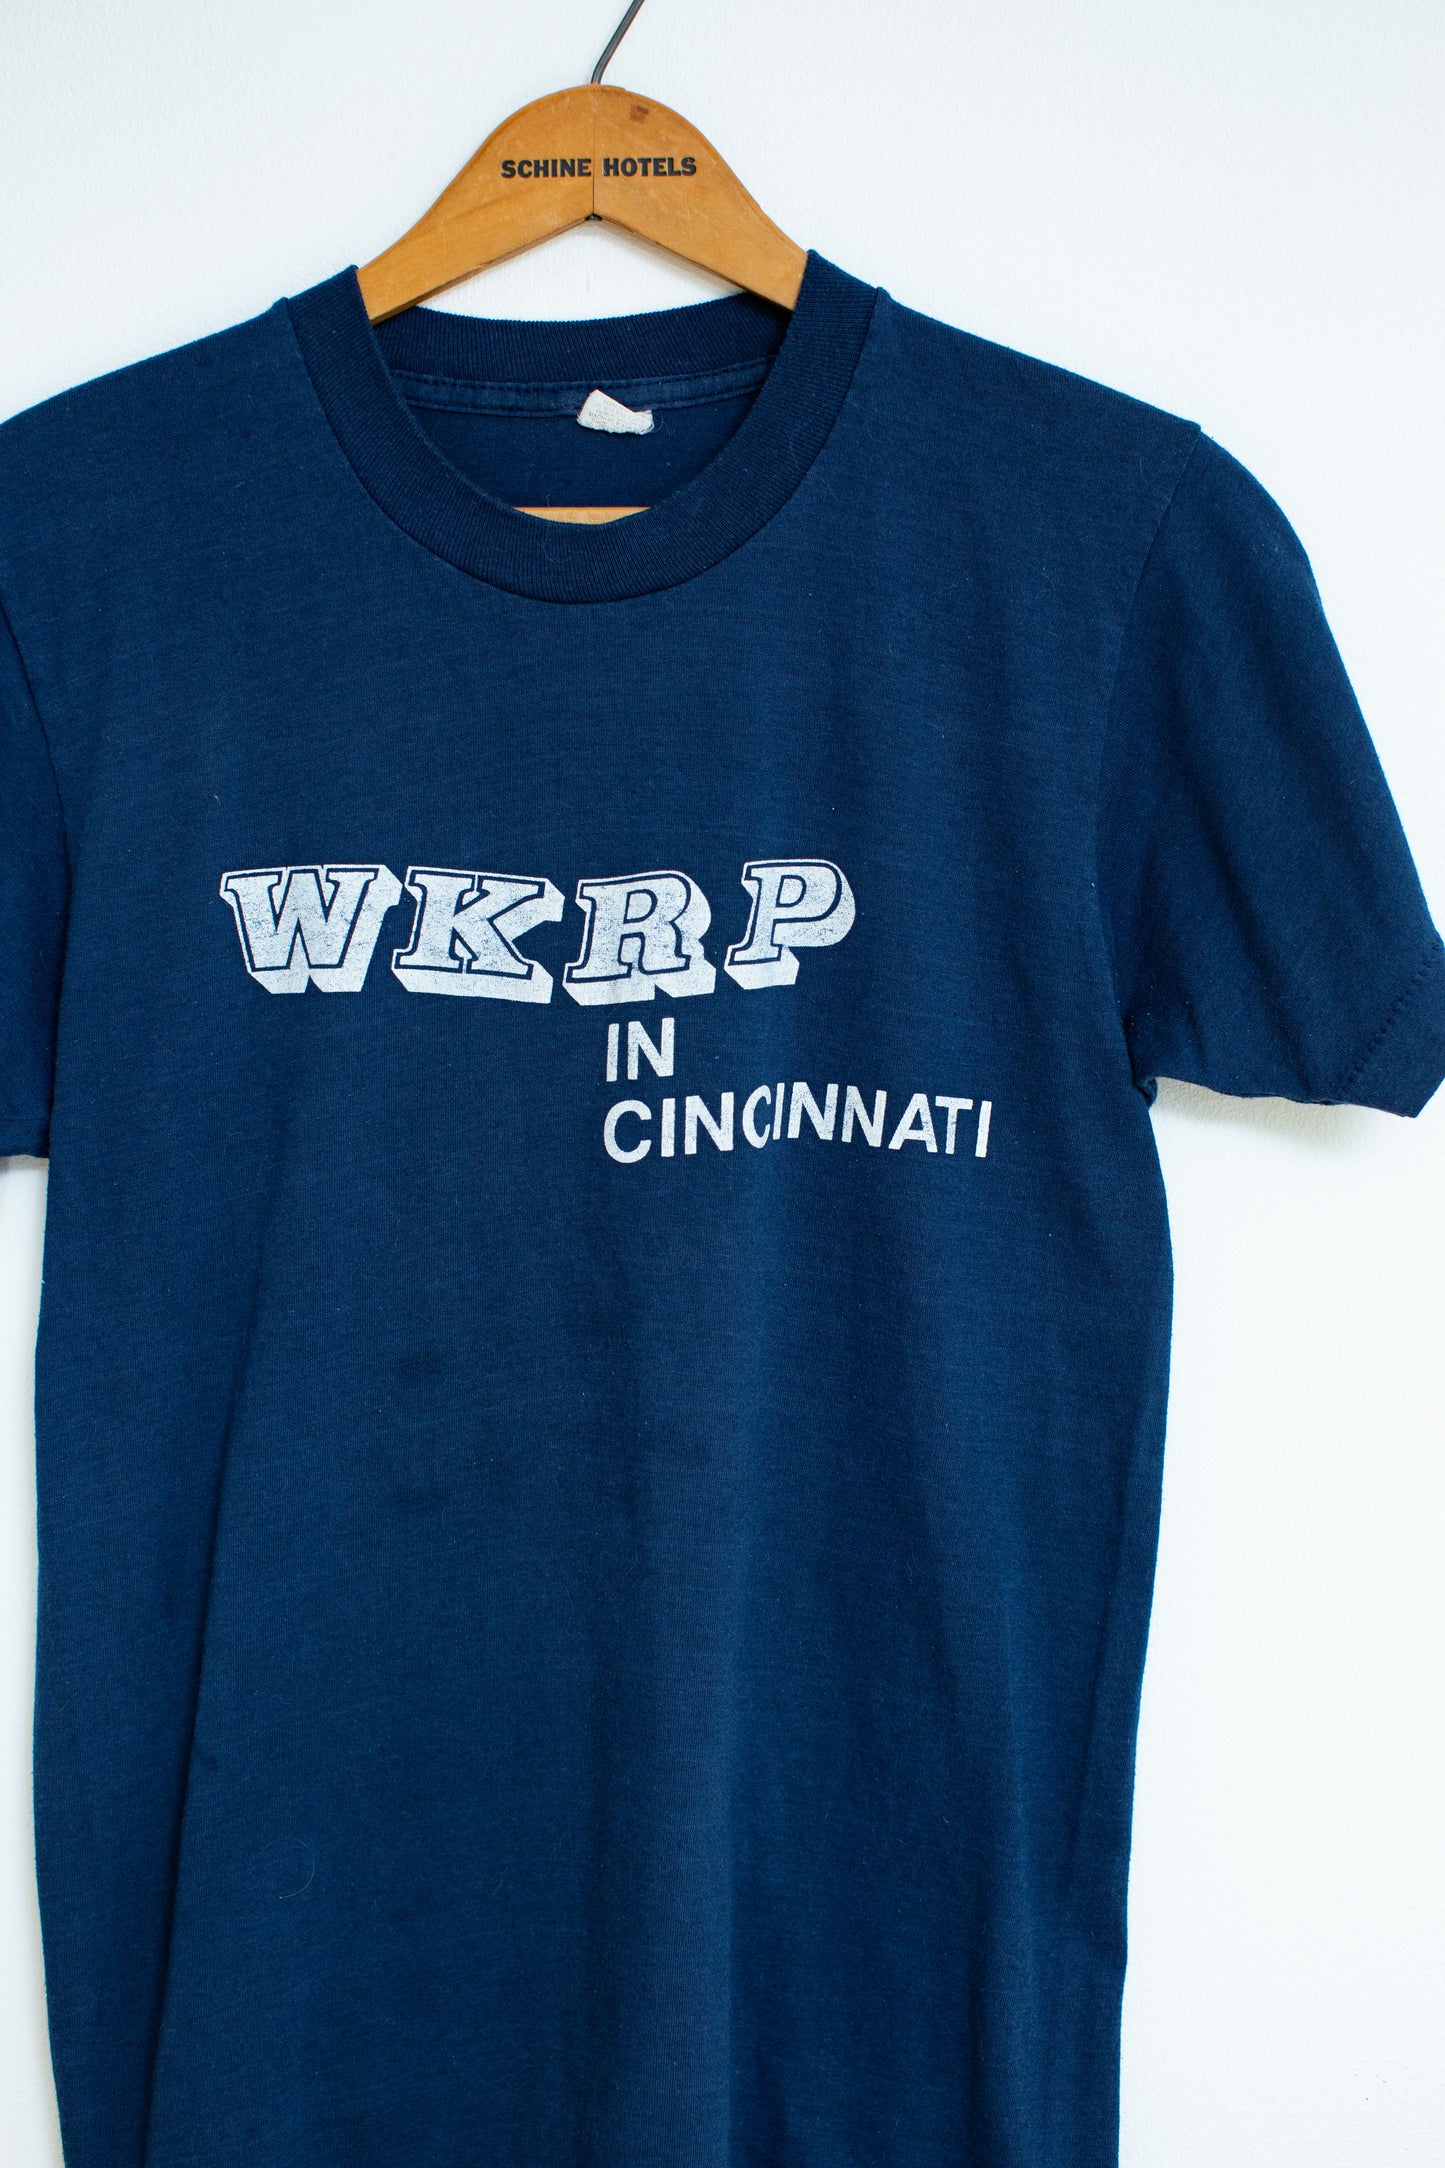 Vintage WKRP in Cincinnati T-shirt Size S